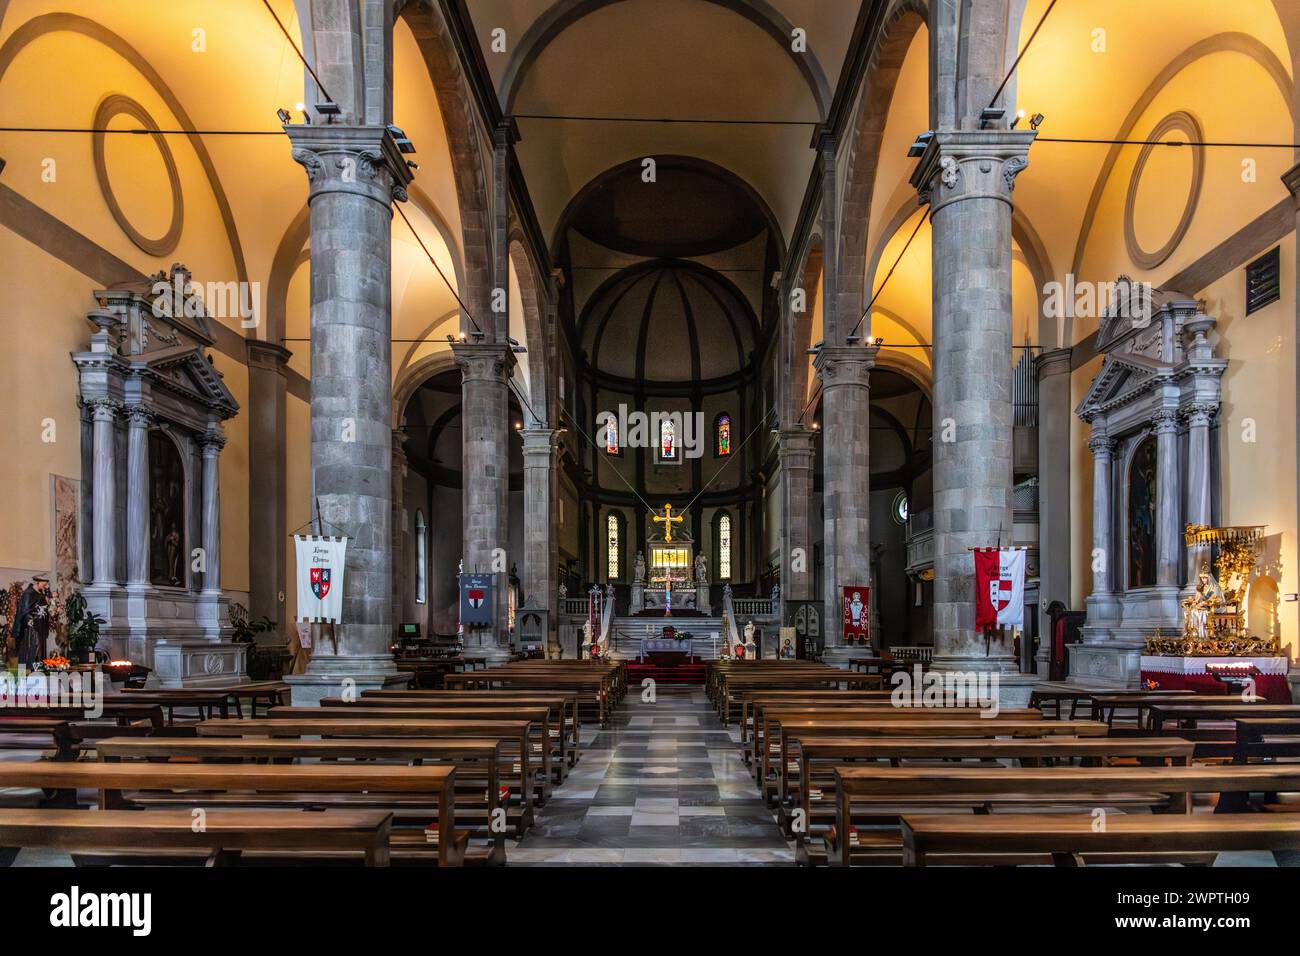 Nave, Cathedral of Santa Maria Assunta, 14th century, Cividale del Friuli, city with historical treasures, UNESCO World Heritage Site, Friuli, Italy Stock Photo